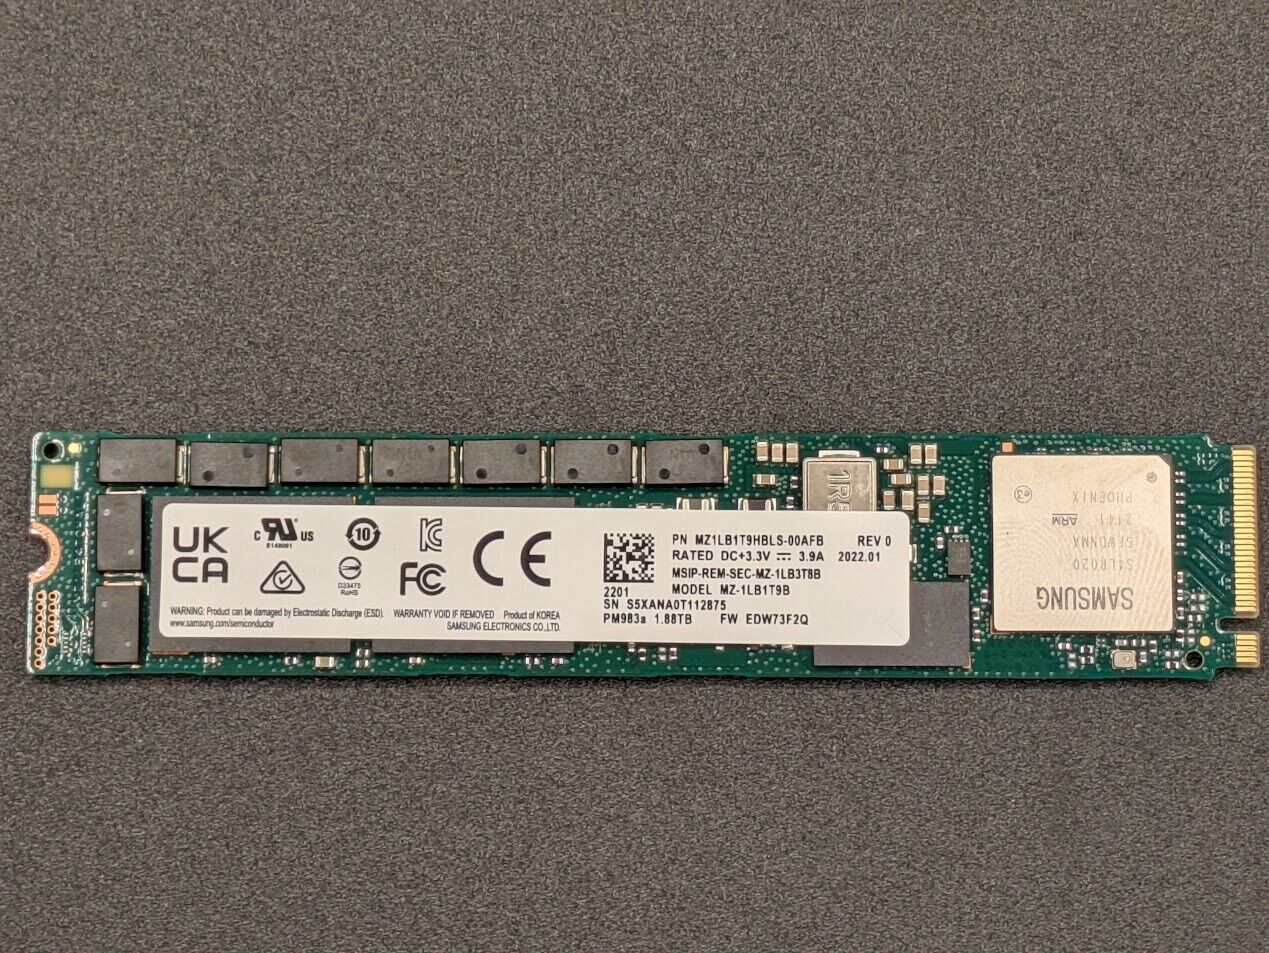 MZ-1LB1T9B Samsung PM983 1.92TB NVMe PCIe M.2 22110 1.88TB SSD New **0DAY,0 HOUR